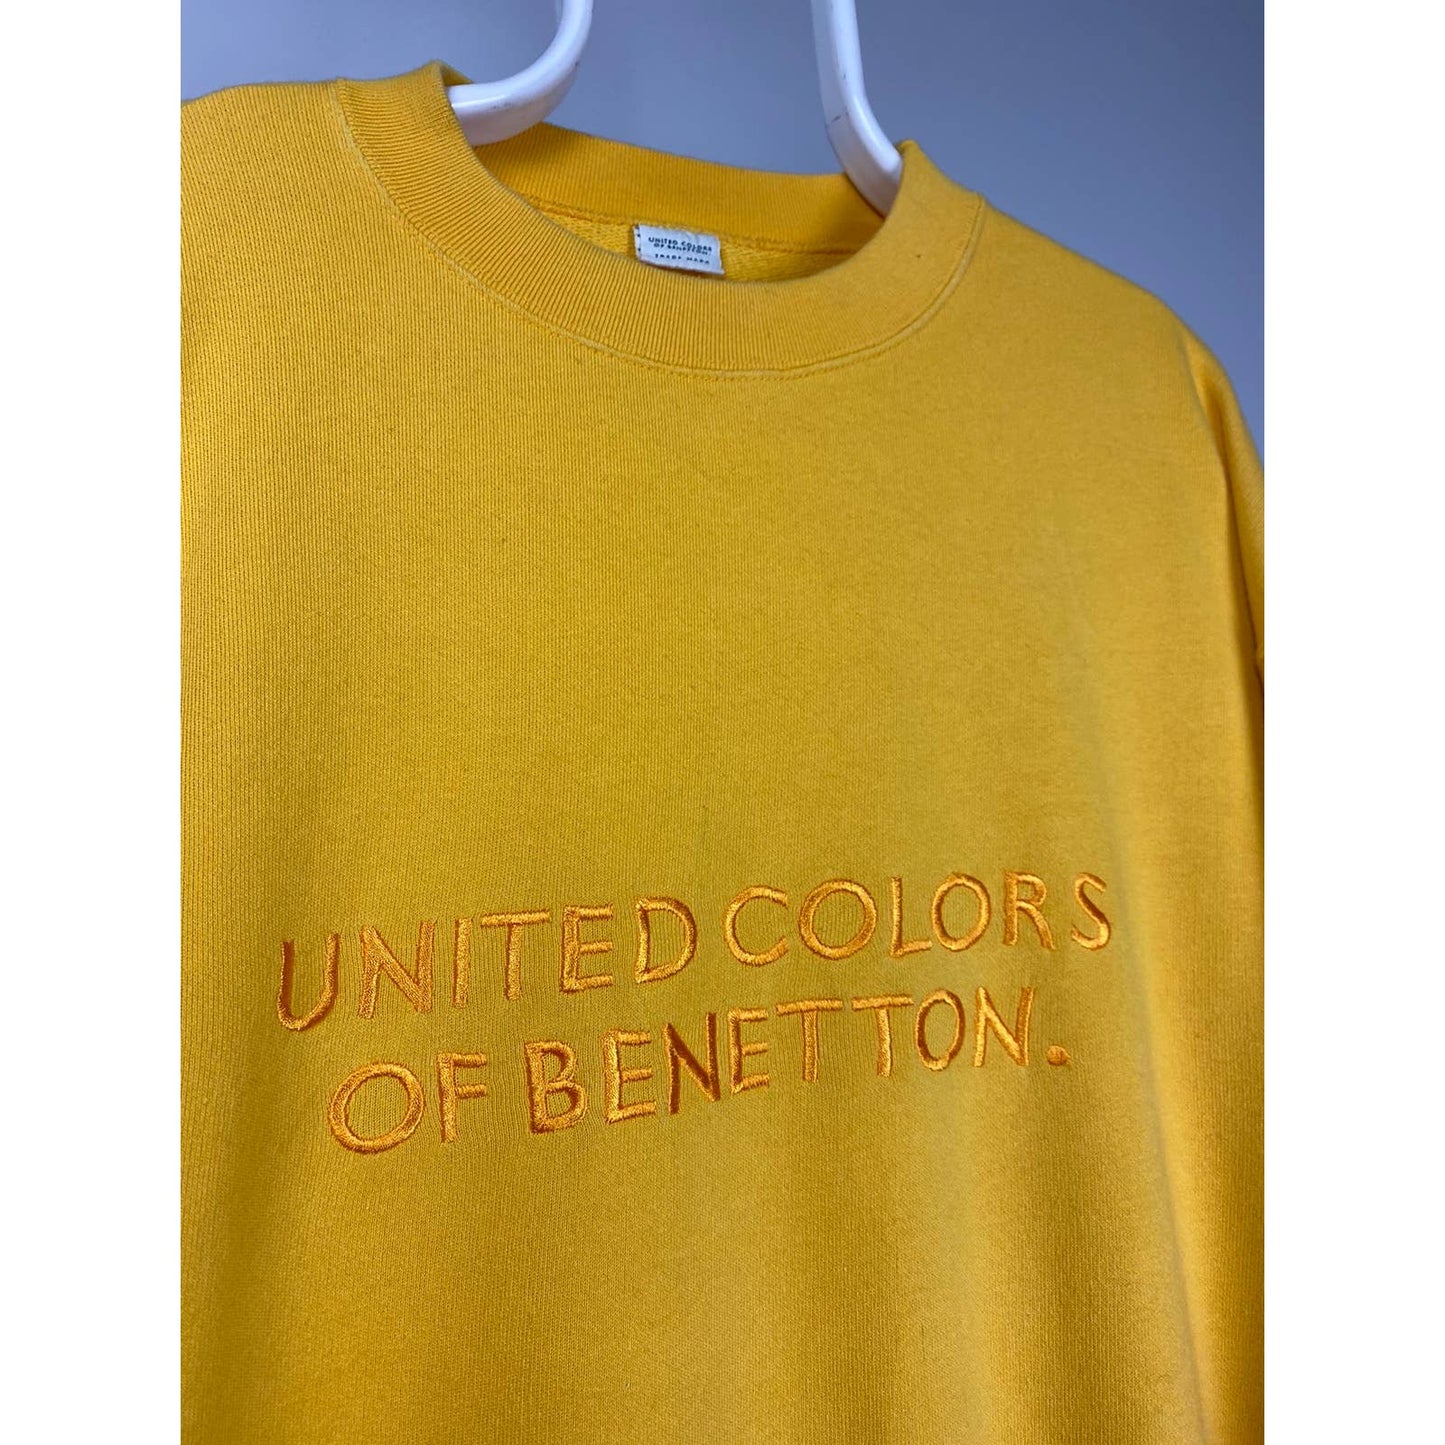 United Colors of Benetton vintage spellout sweatshirt yellow